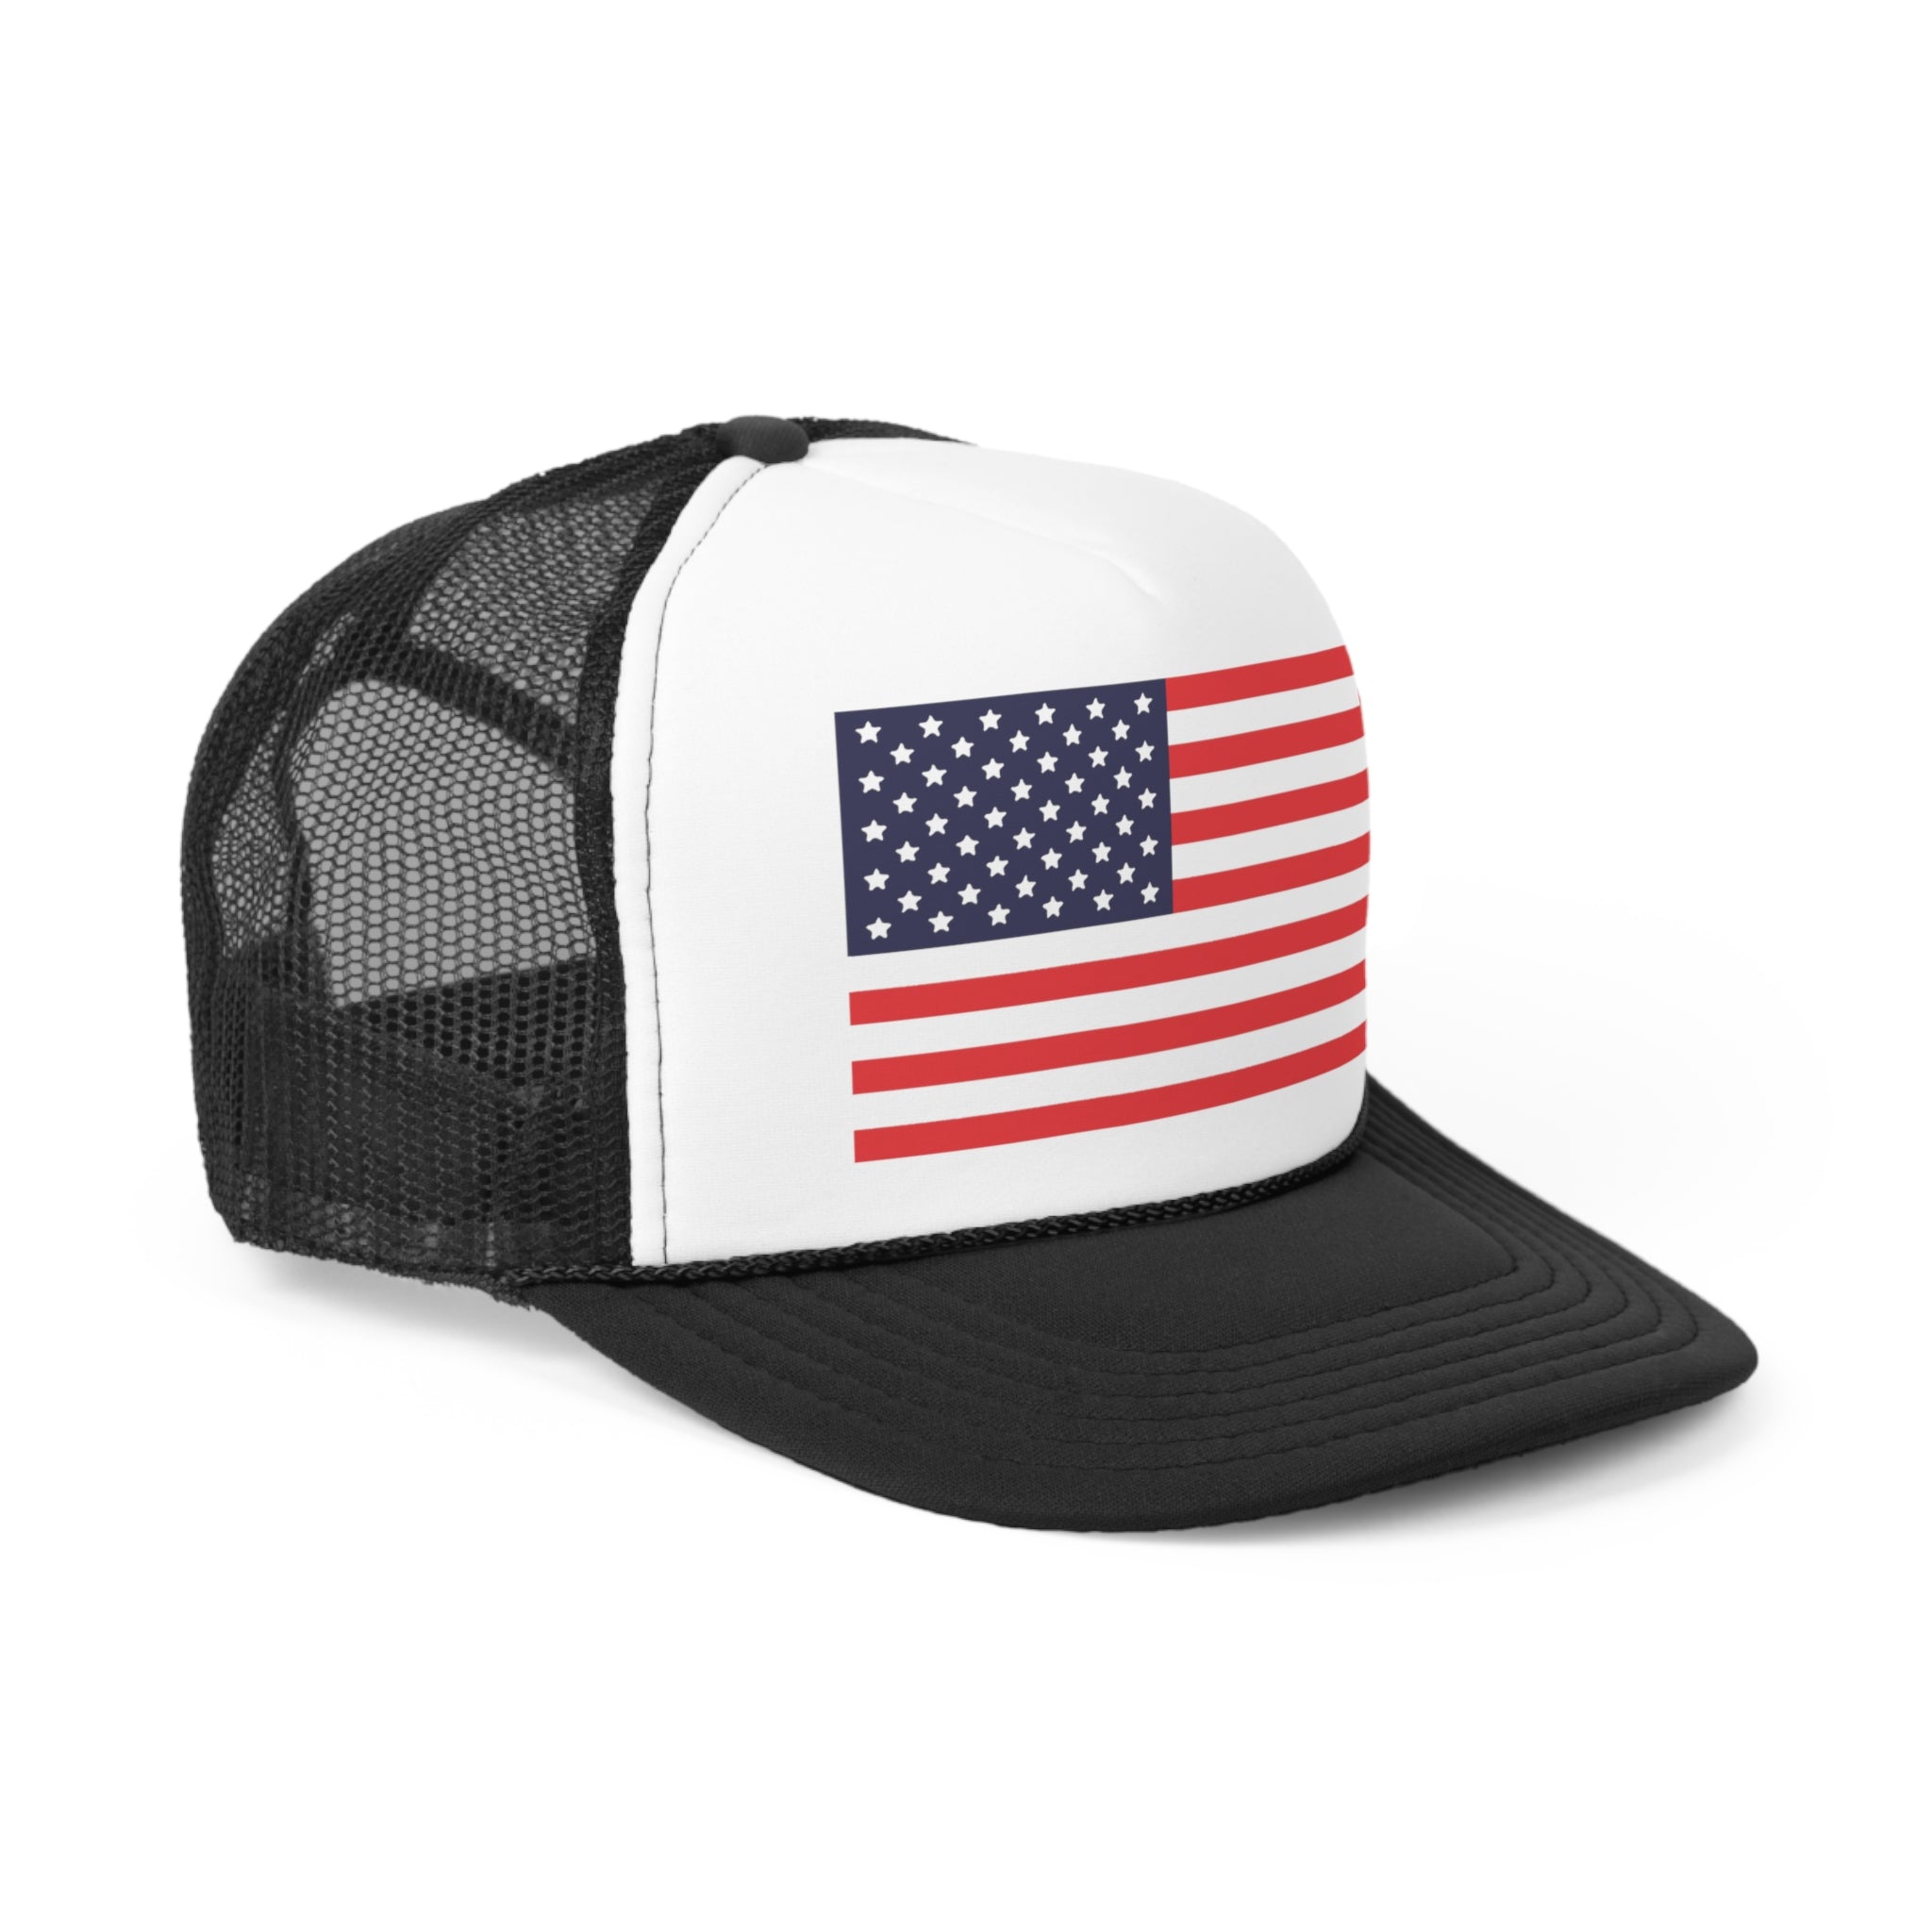 U.S. Trucker Cap